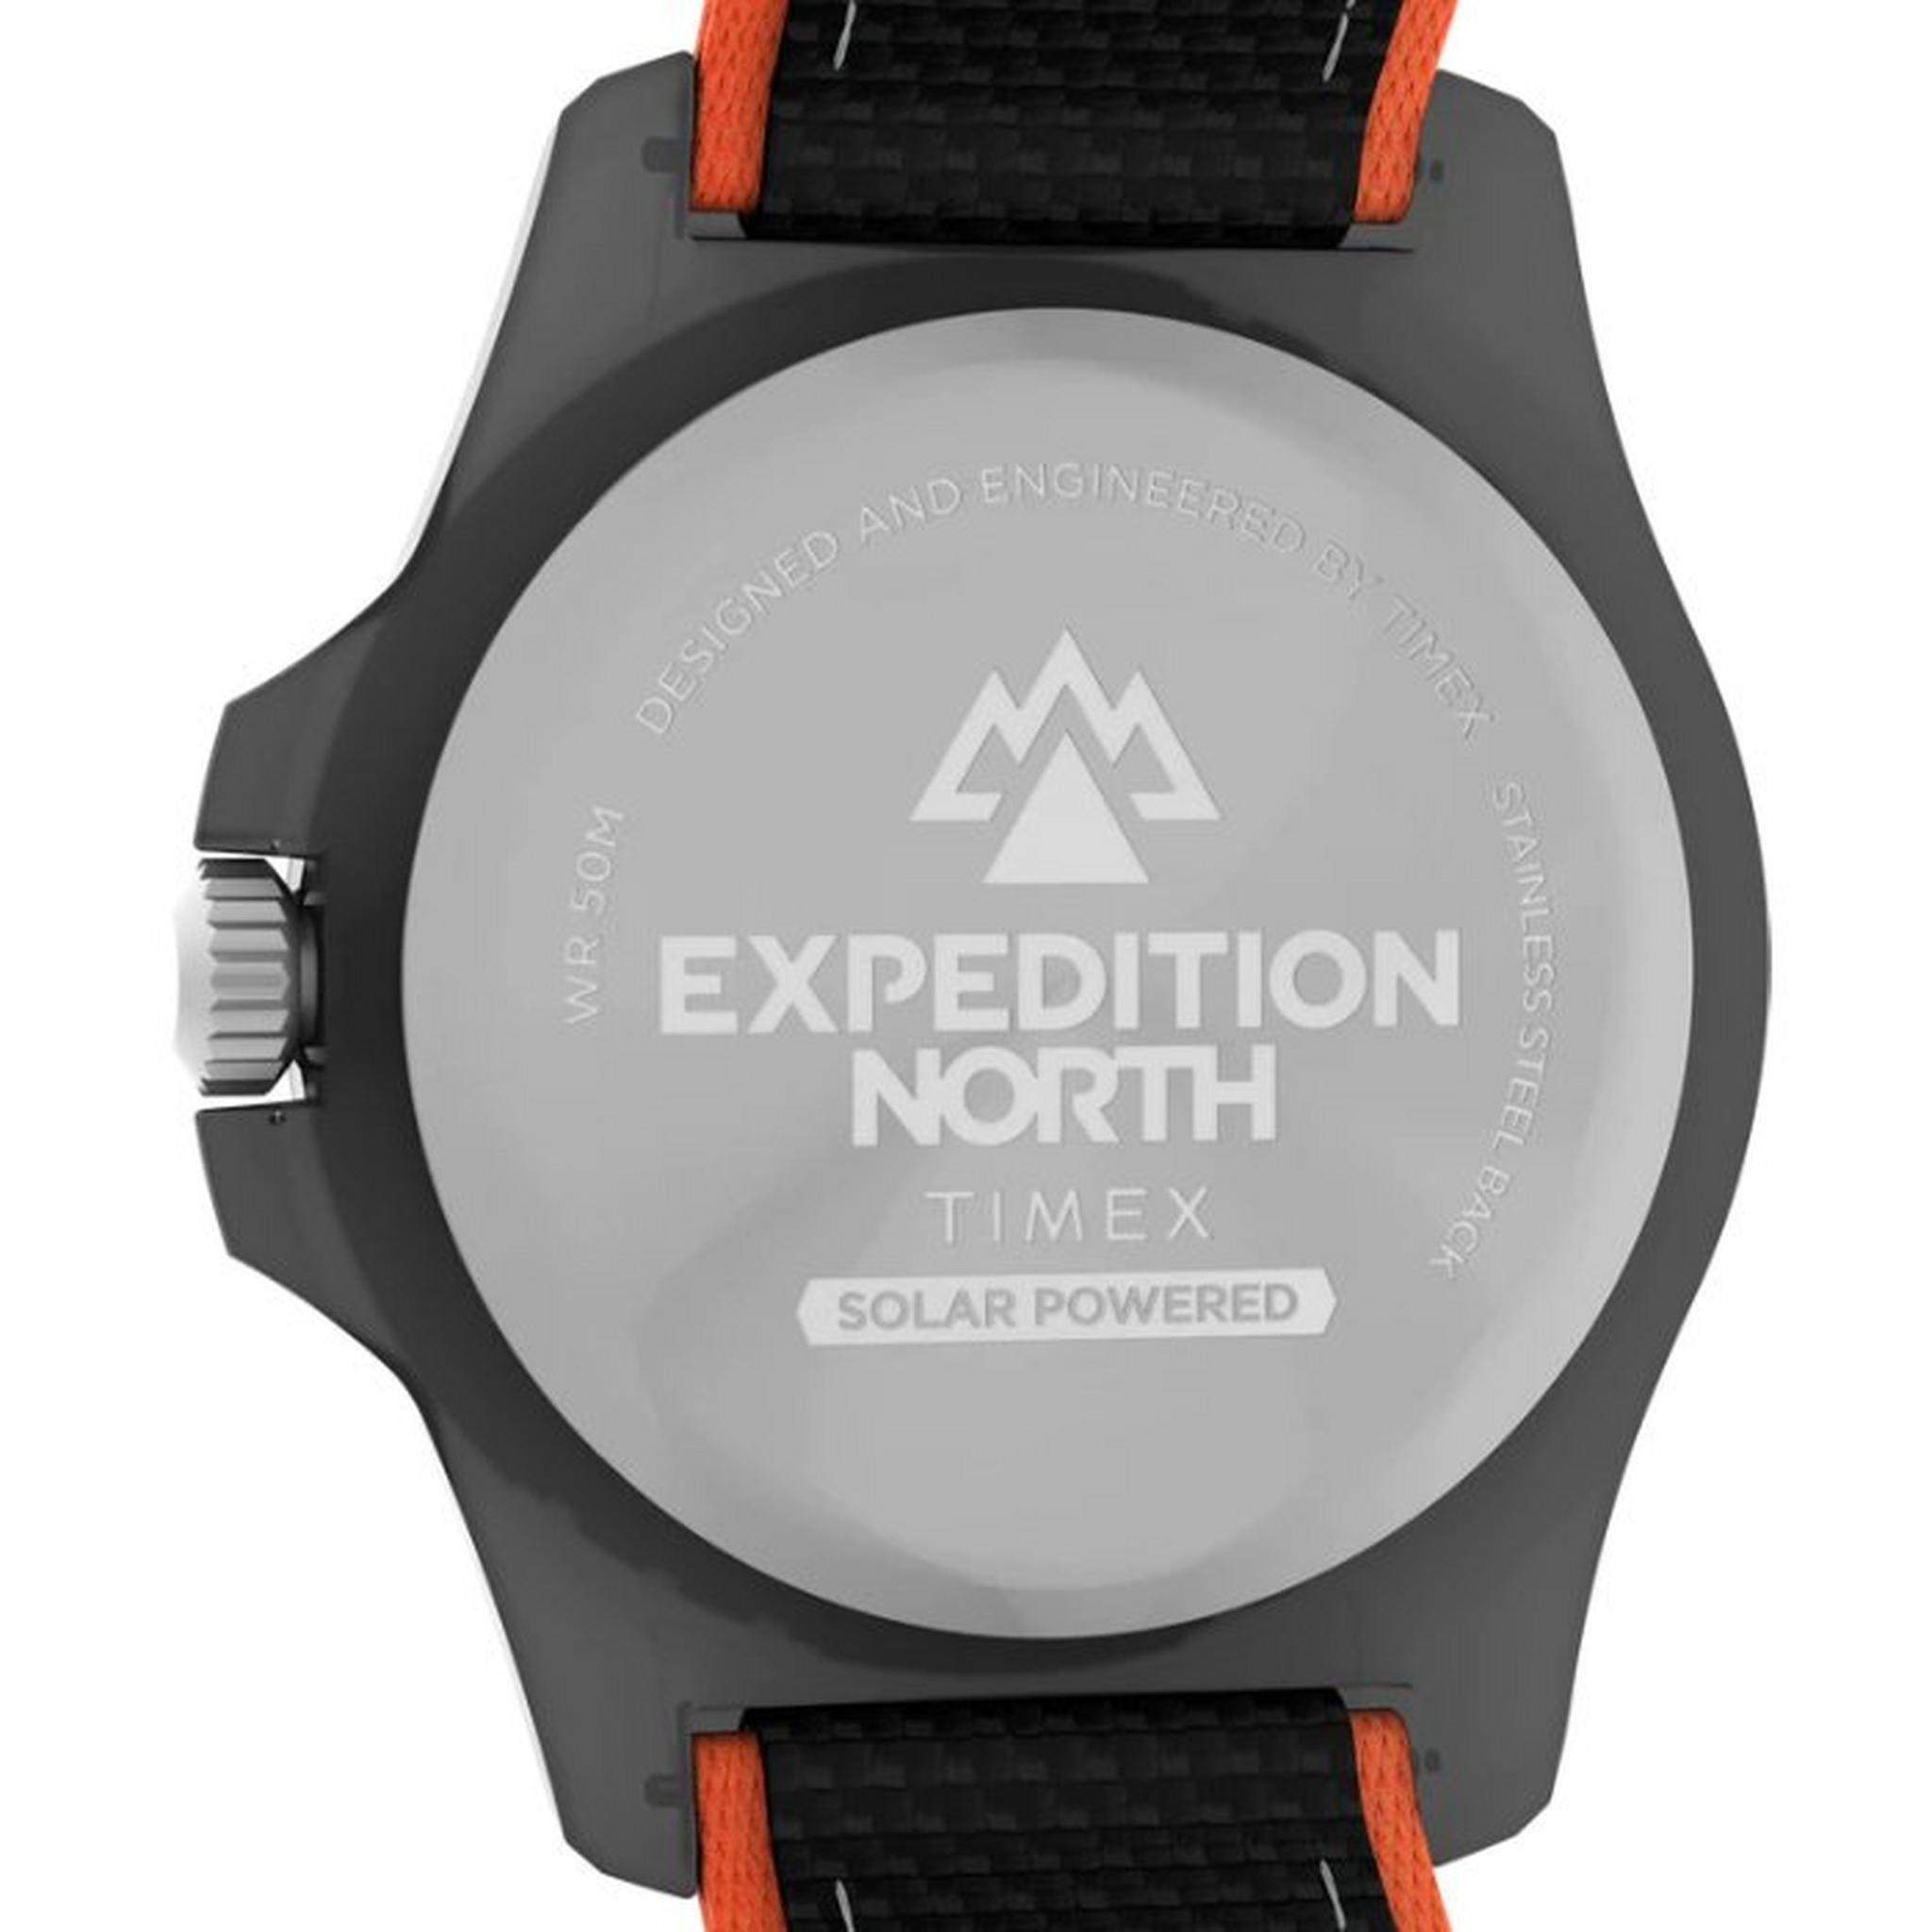 Timex Expedition Men’s Watch, 46mm, Tide Ocean Material Strap, Analog, TW2V66100 – Black